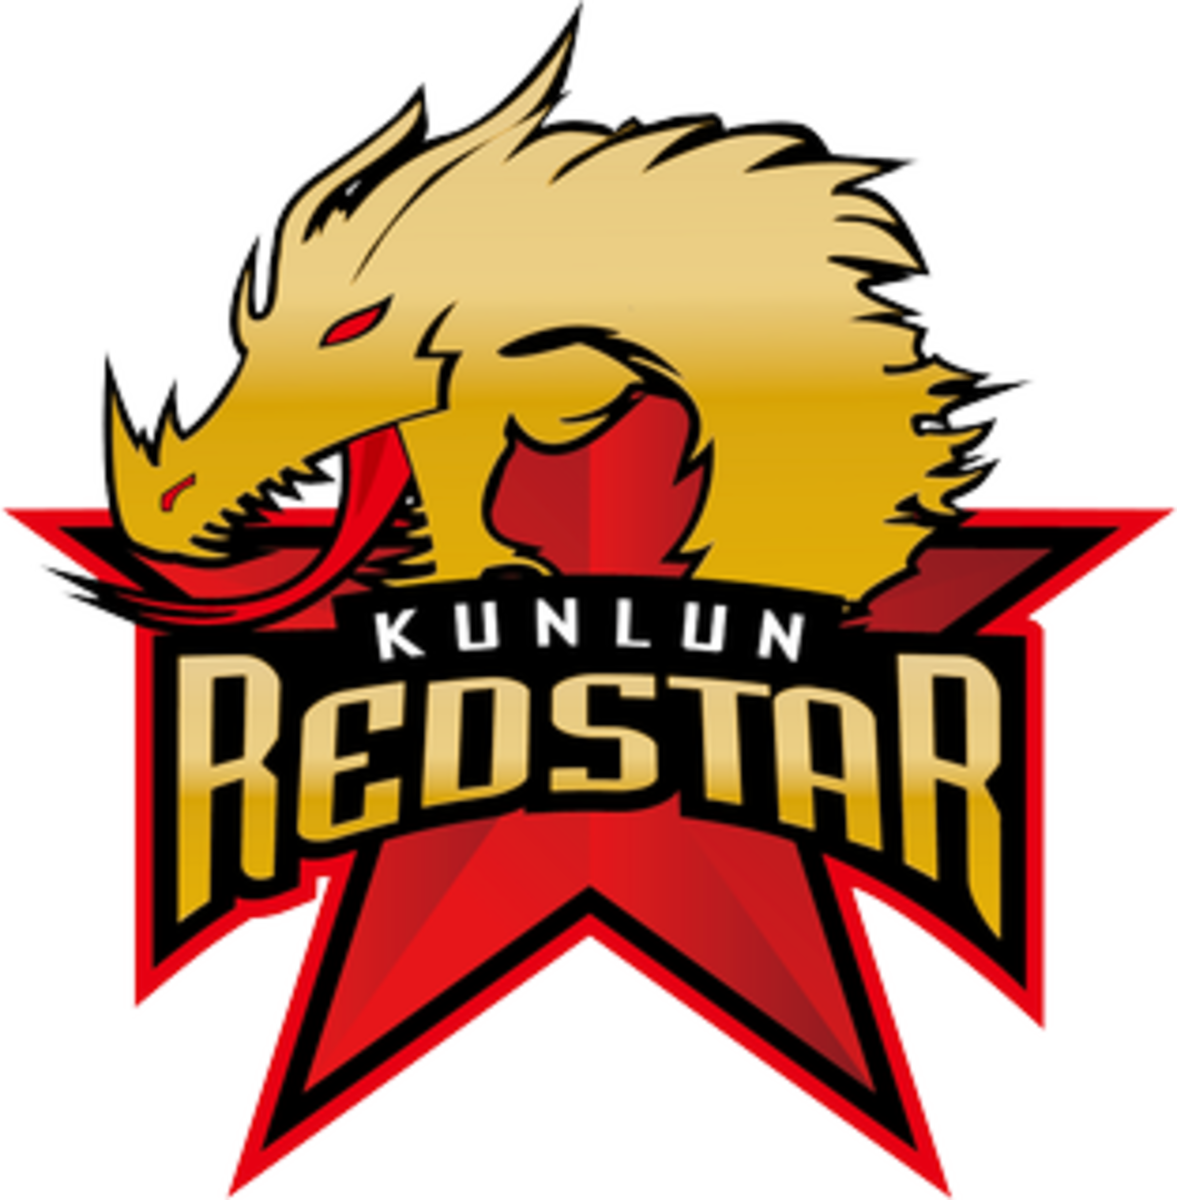 HC_Kunlun_Red_Star_logo.png